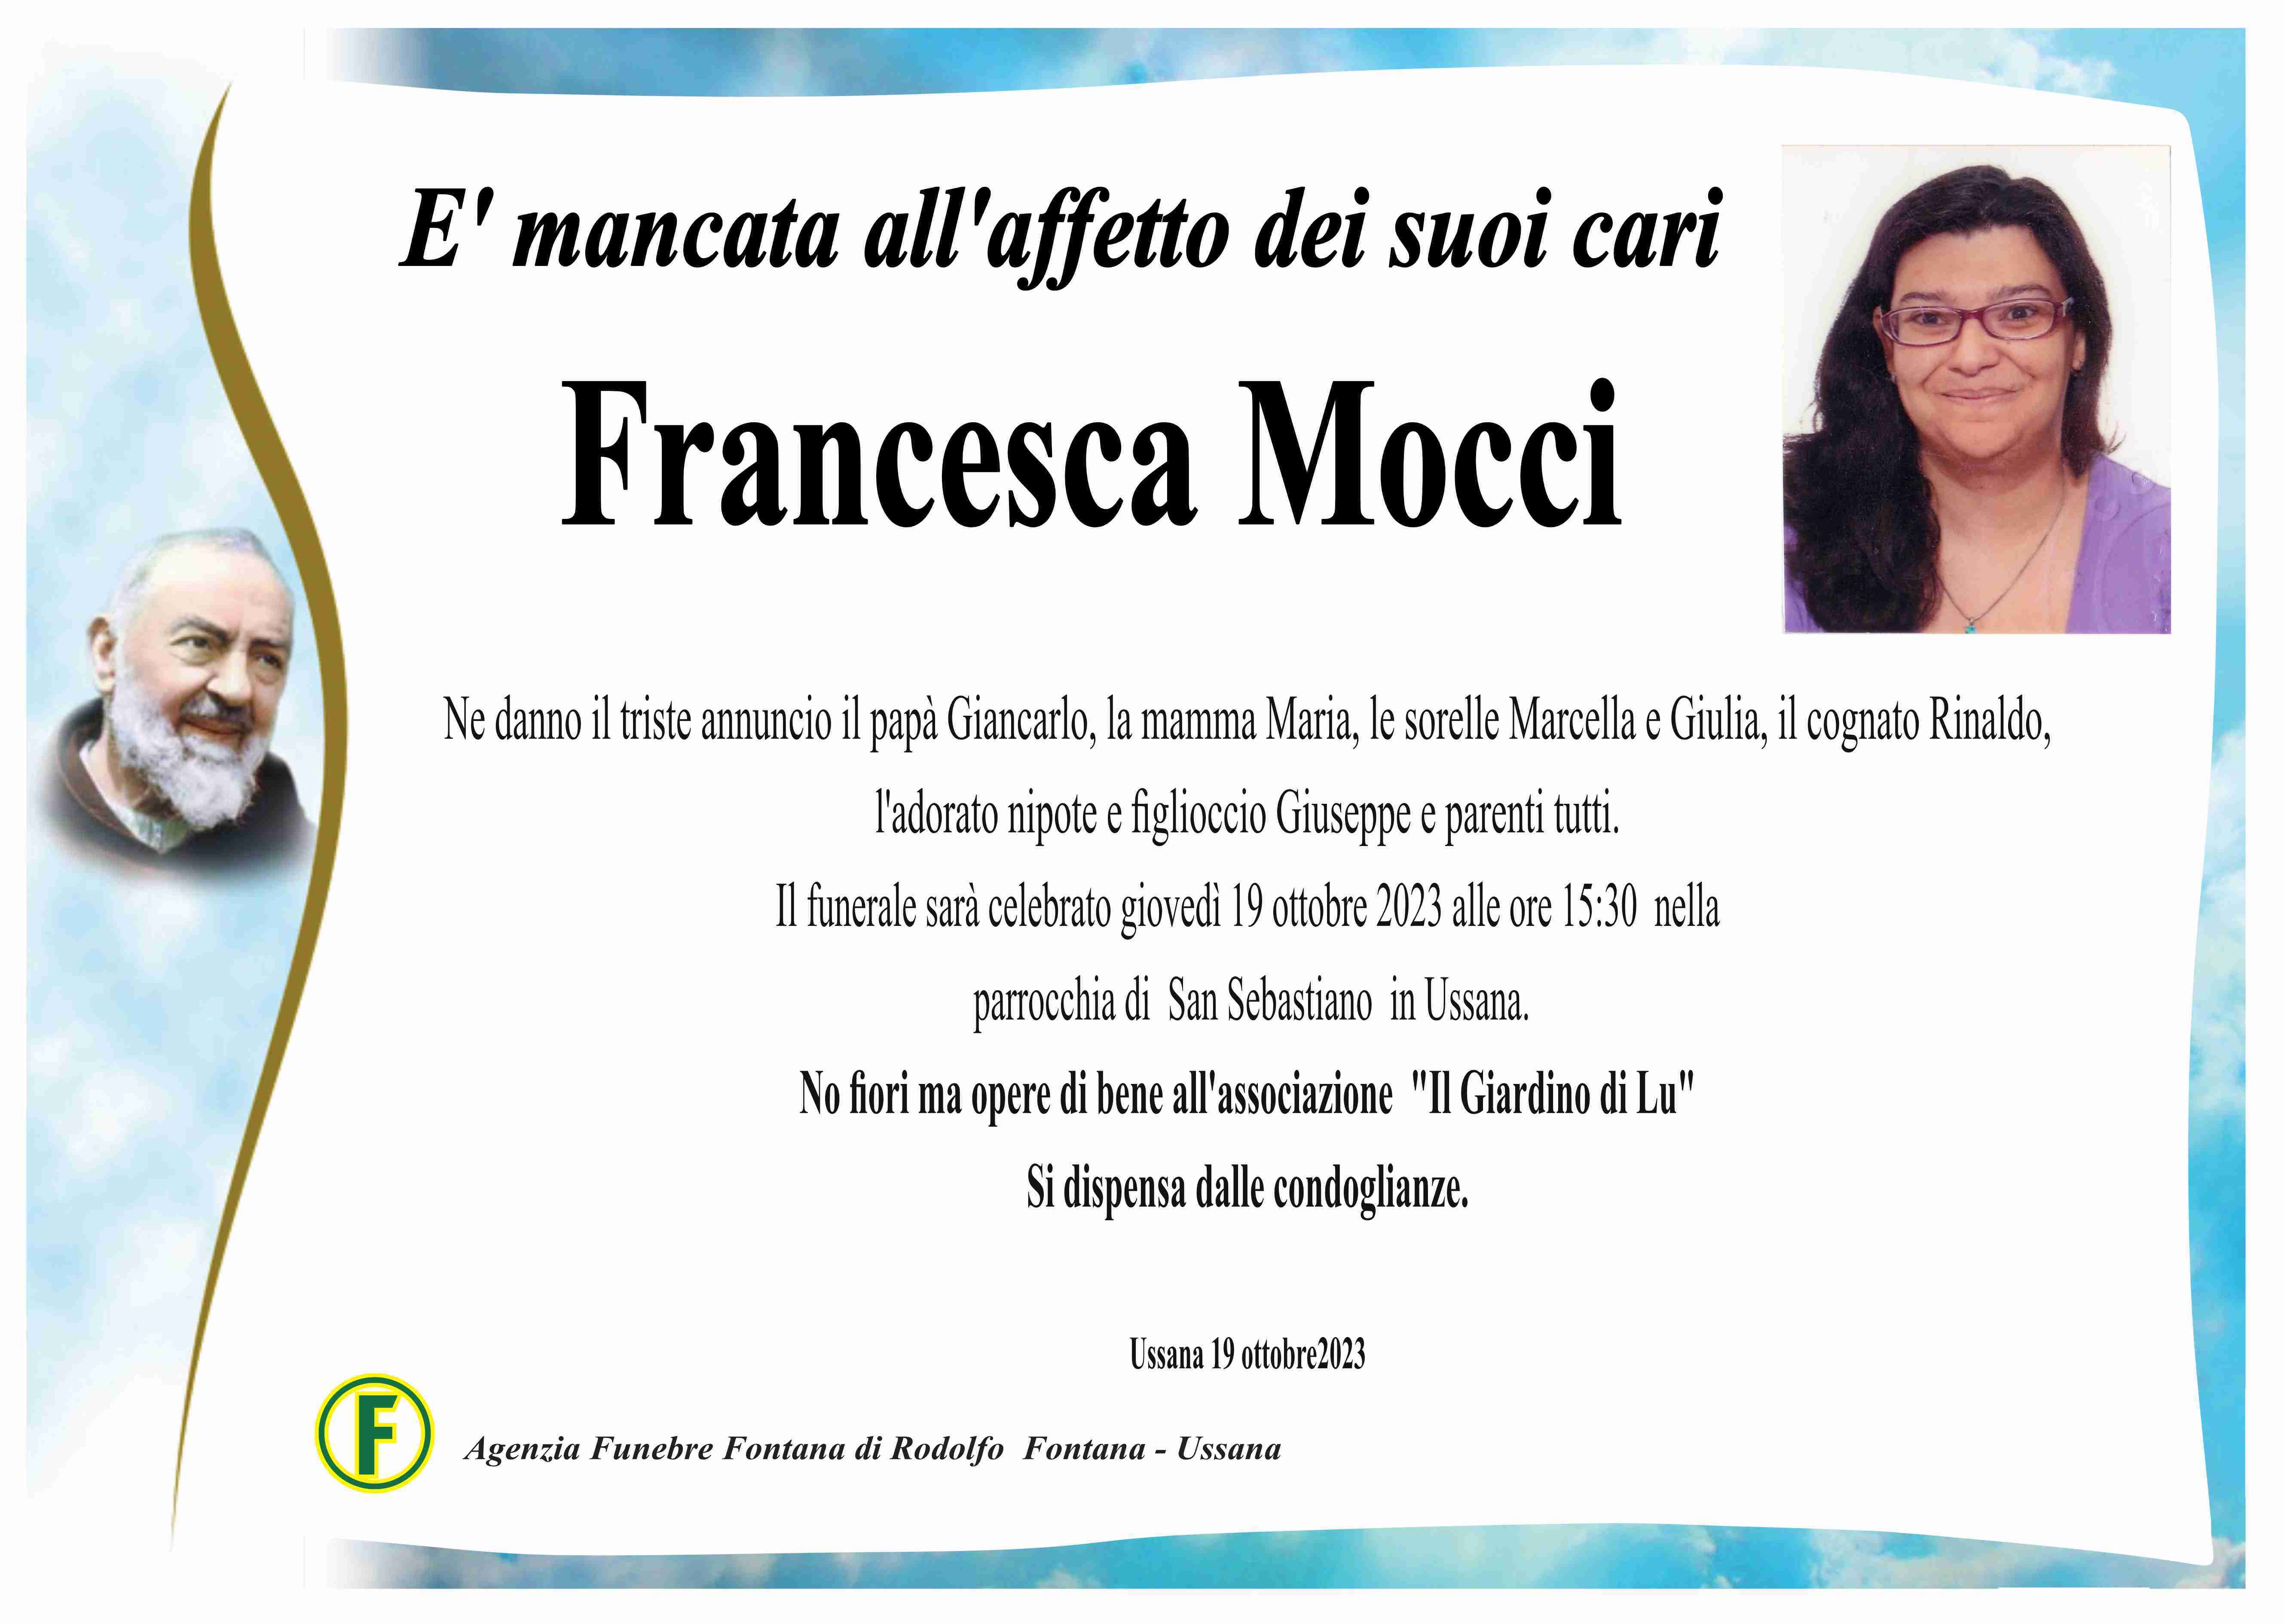 Francesca Mocci